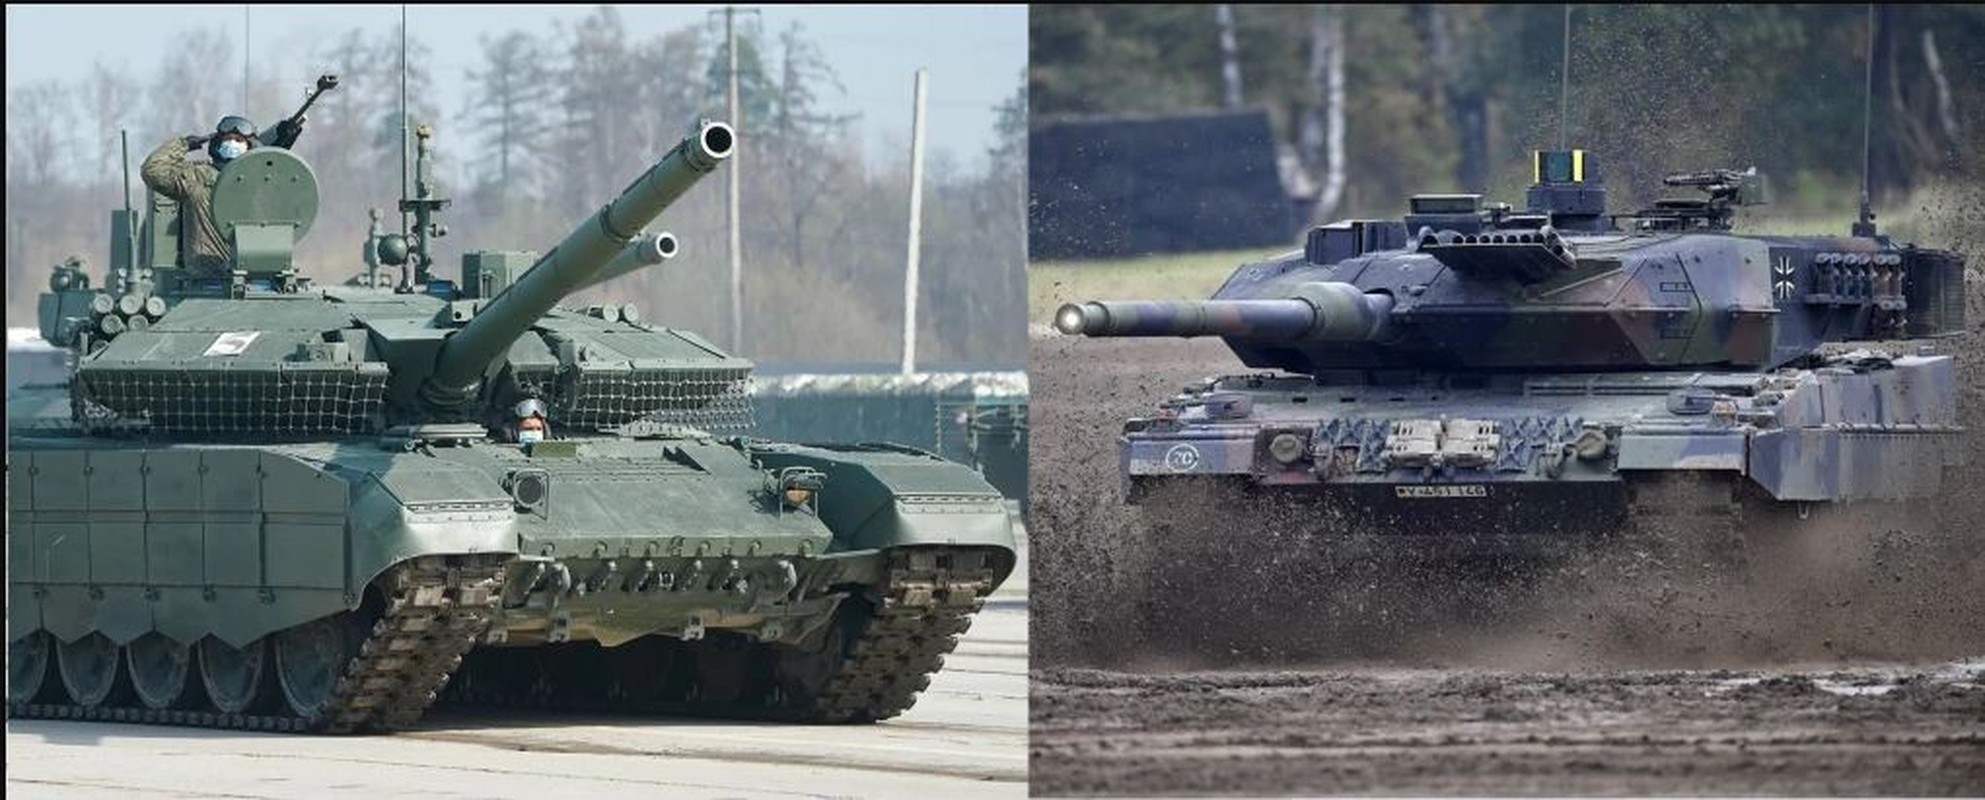 Sieu tang T-90M Proryv sap doi dau Leopard-2 tren chien truong Ukraine-Hinh-13